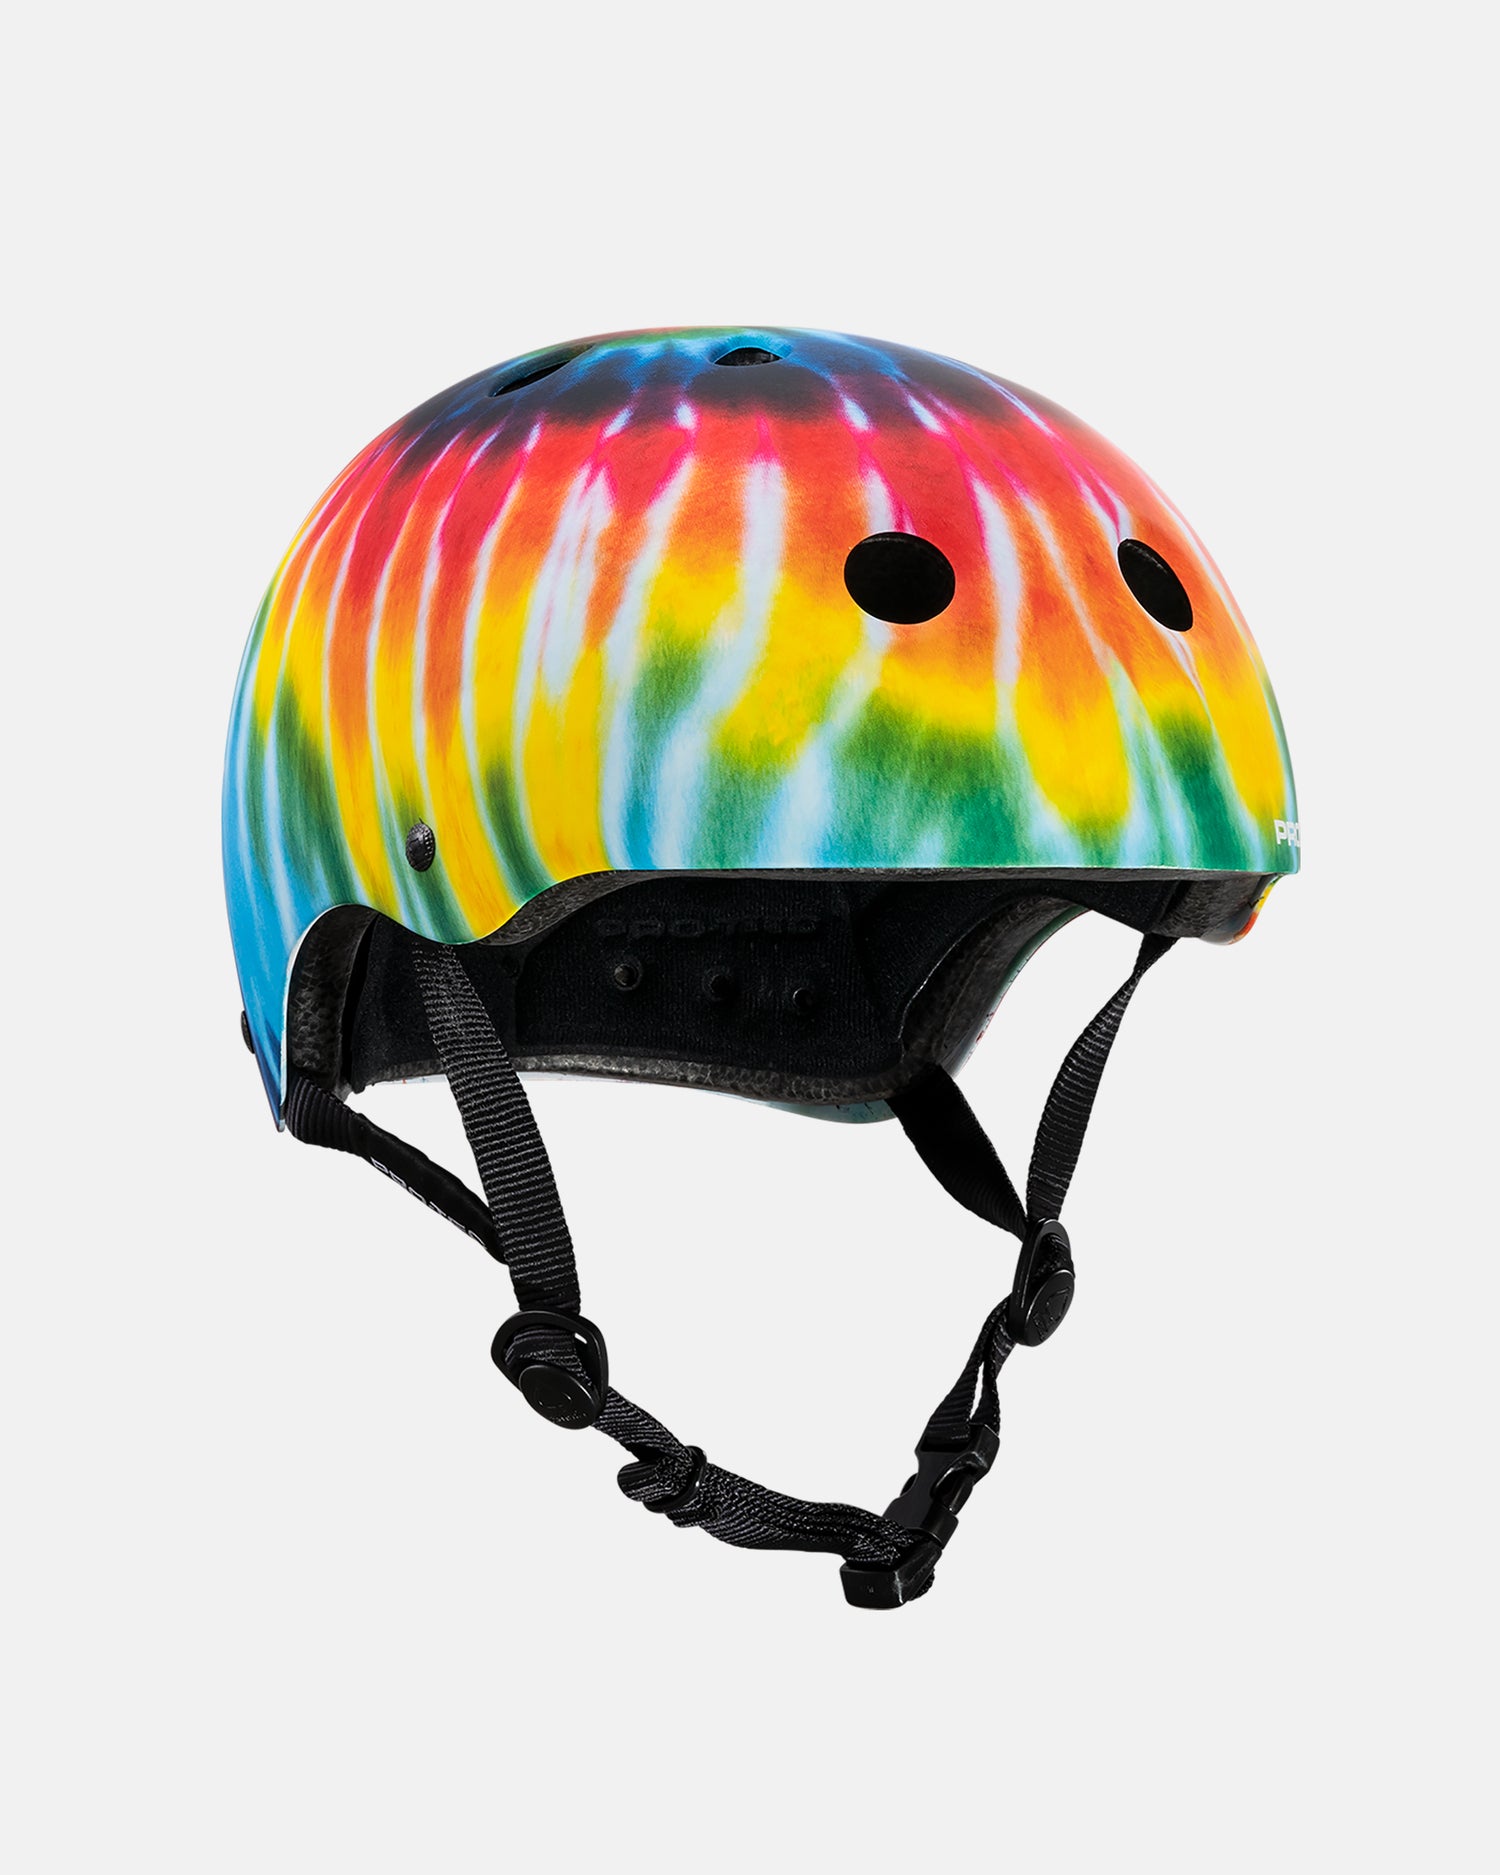 Protec Classic Helmet (Certified) - Tie Dye - Impala Rollerskates